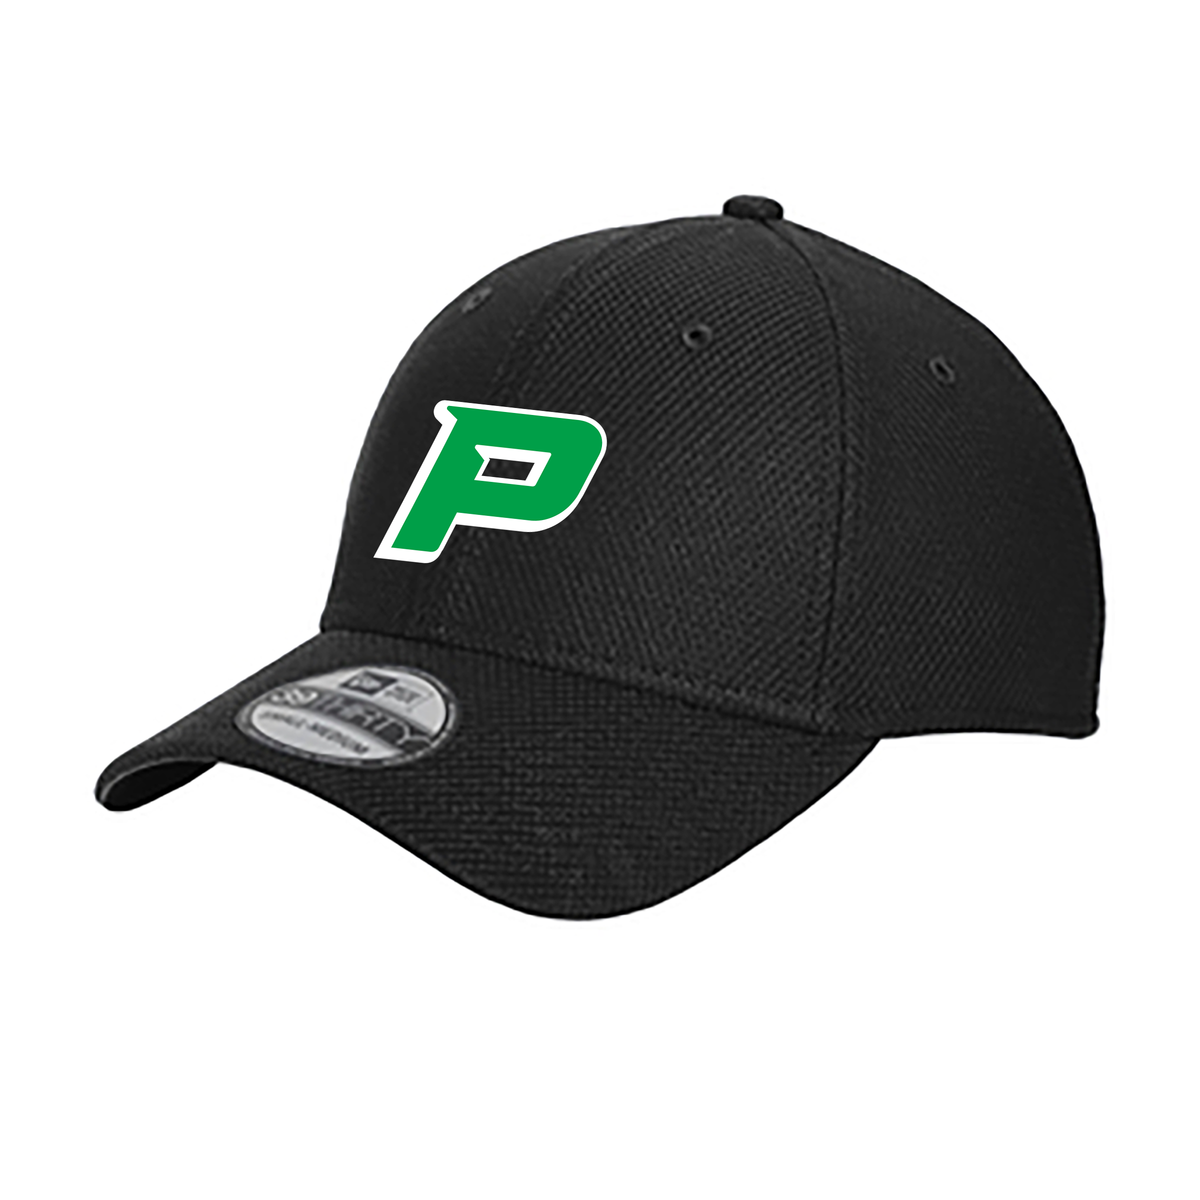 Pryor Baseball Farm New Era® Stretch Cotton Striped Cap